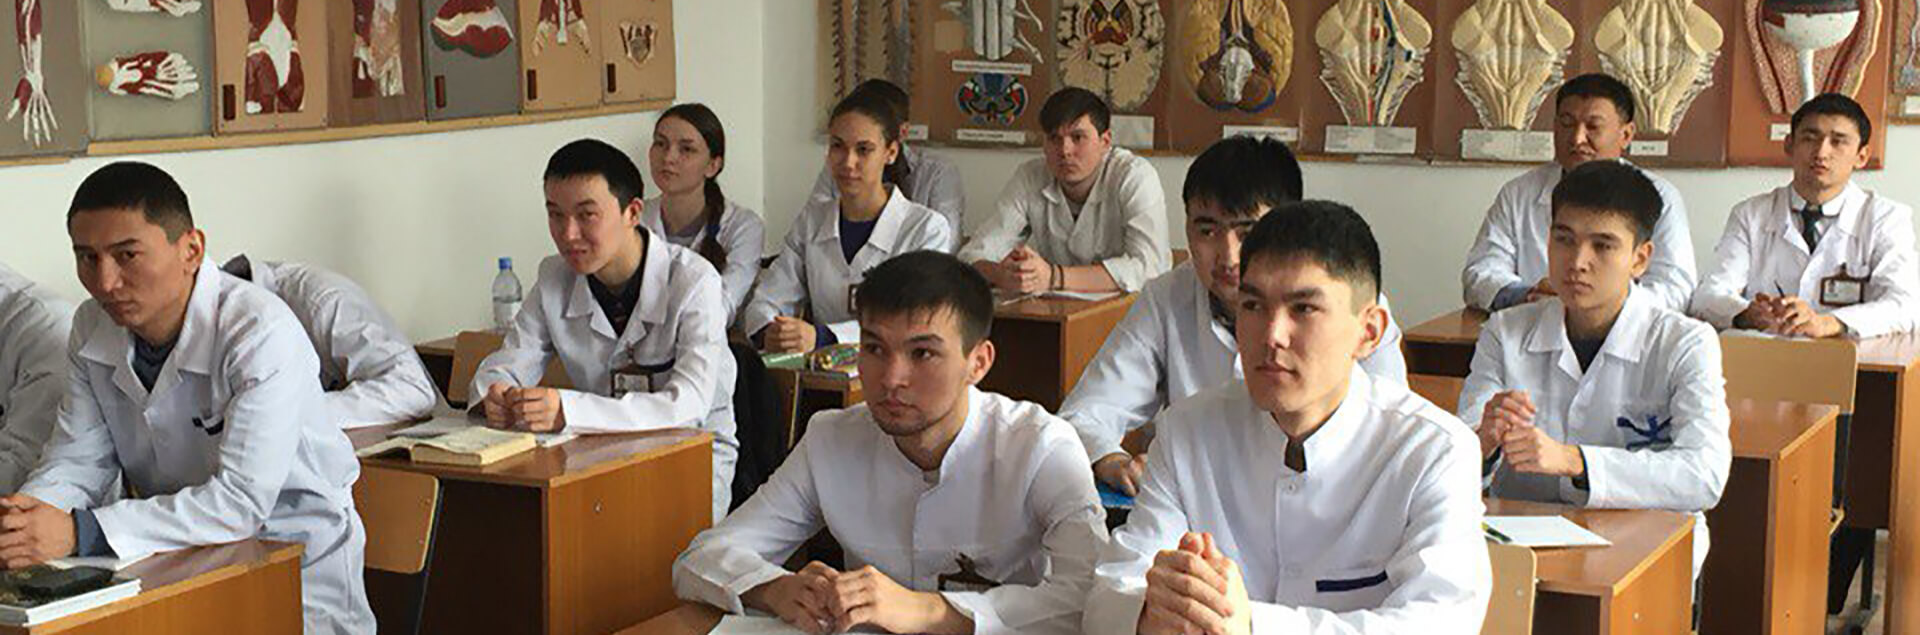 медколледжи Казахстана